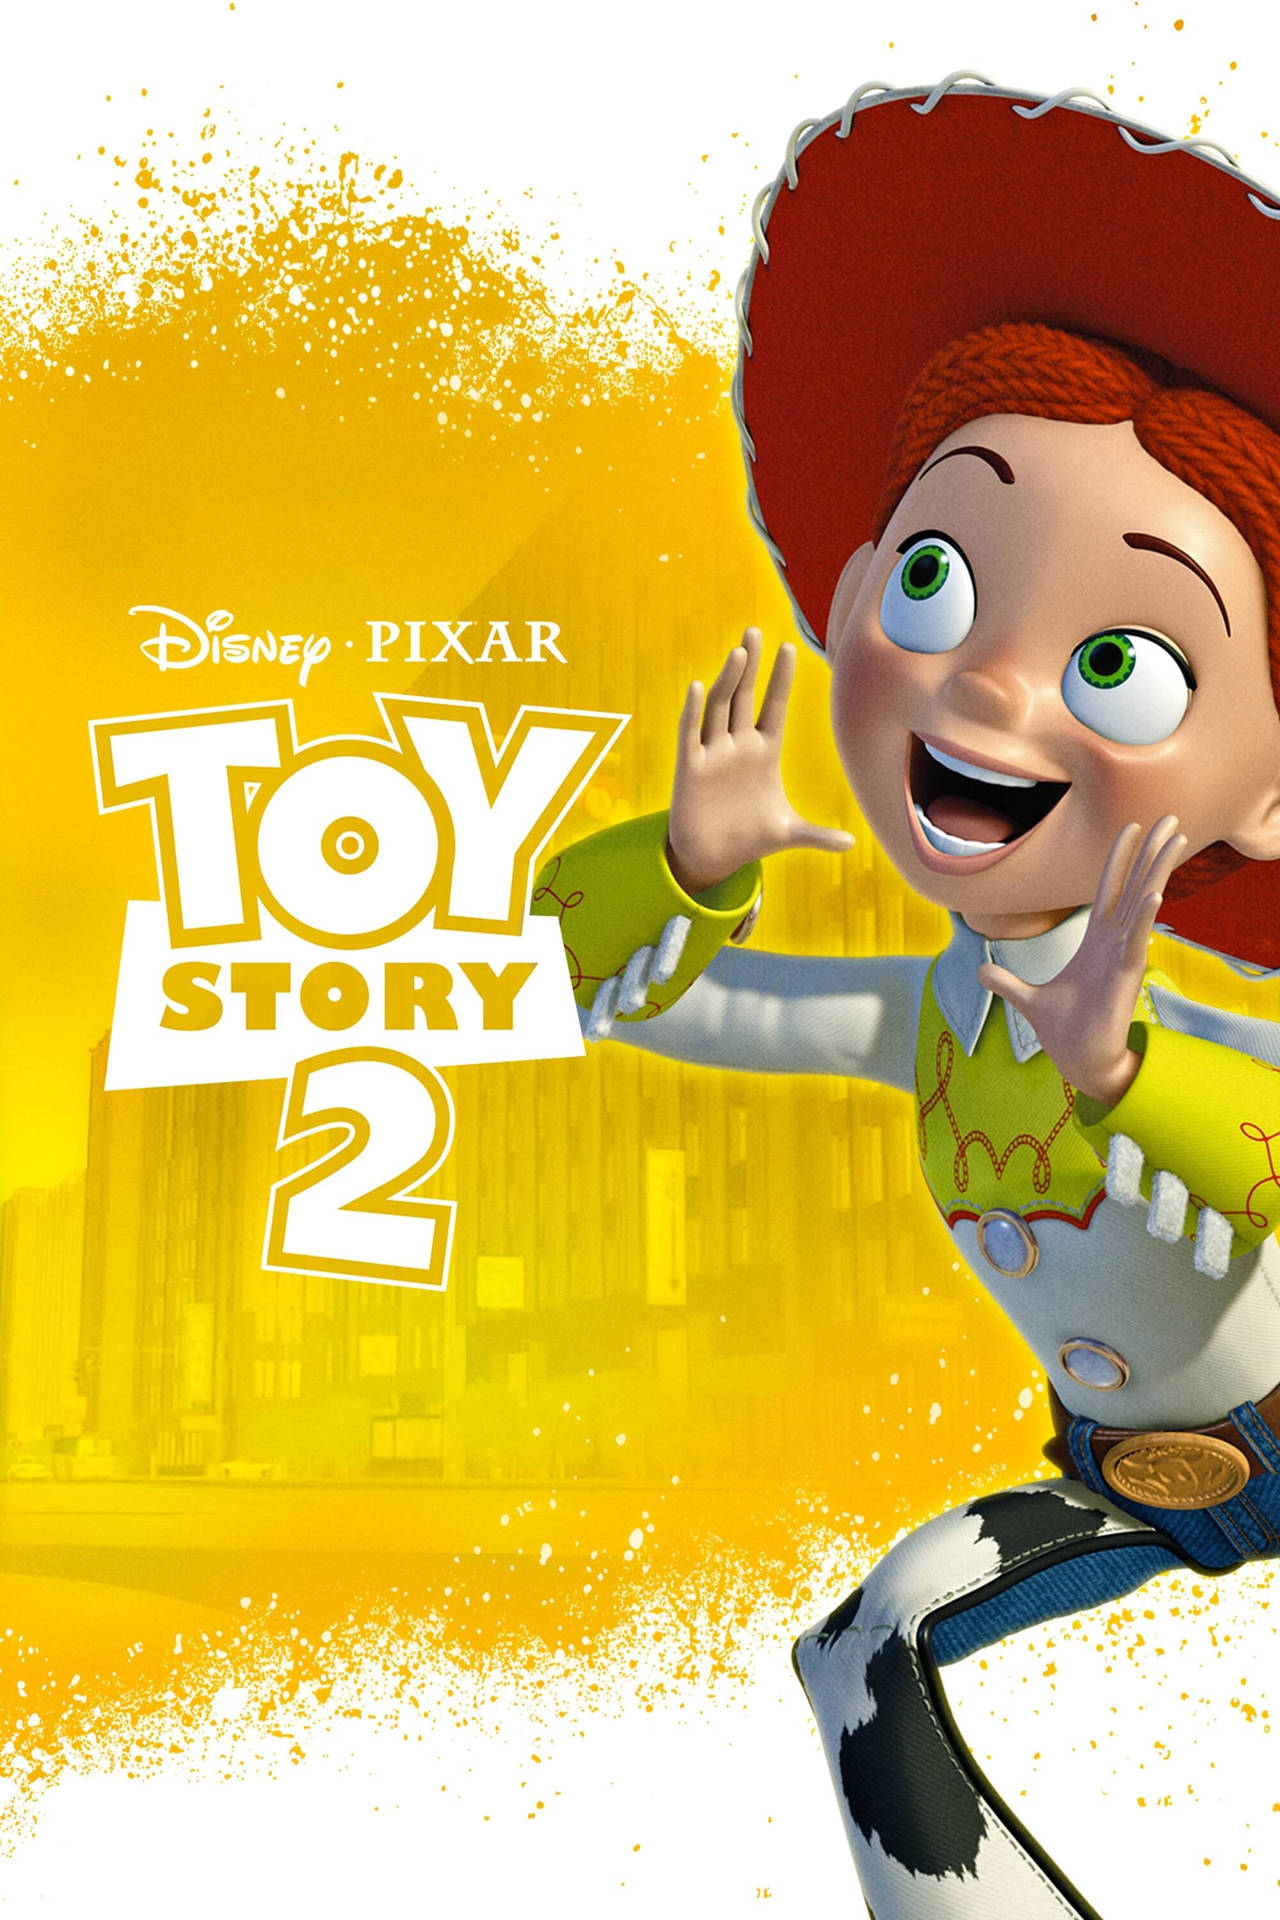 Jessie Toy Story 2 Poster Background